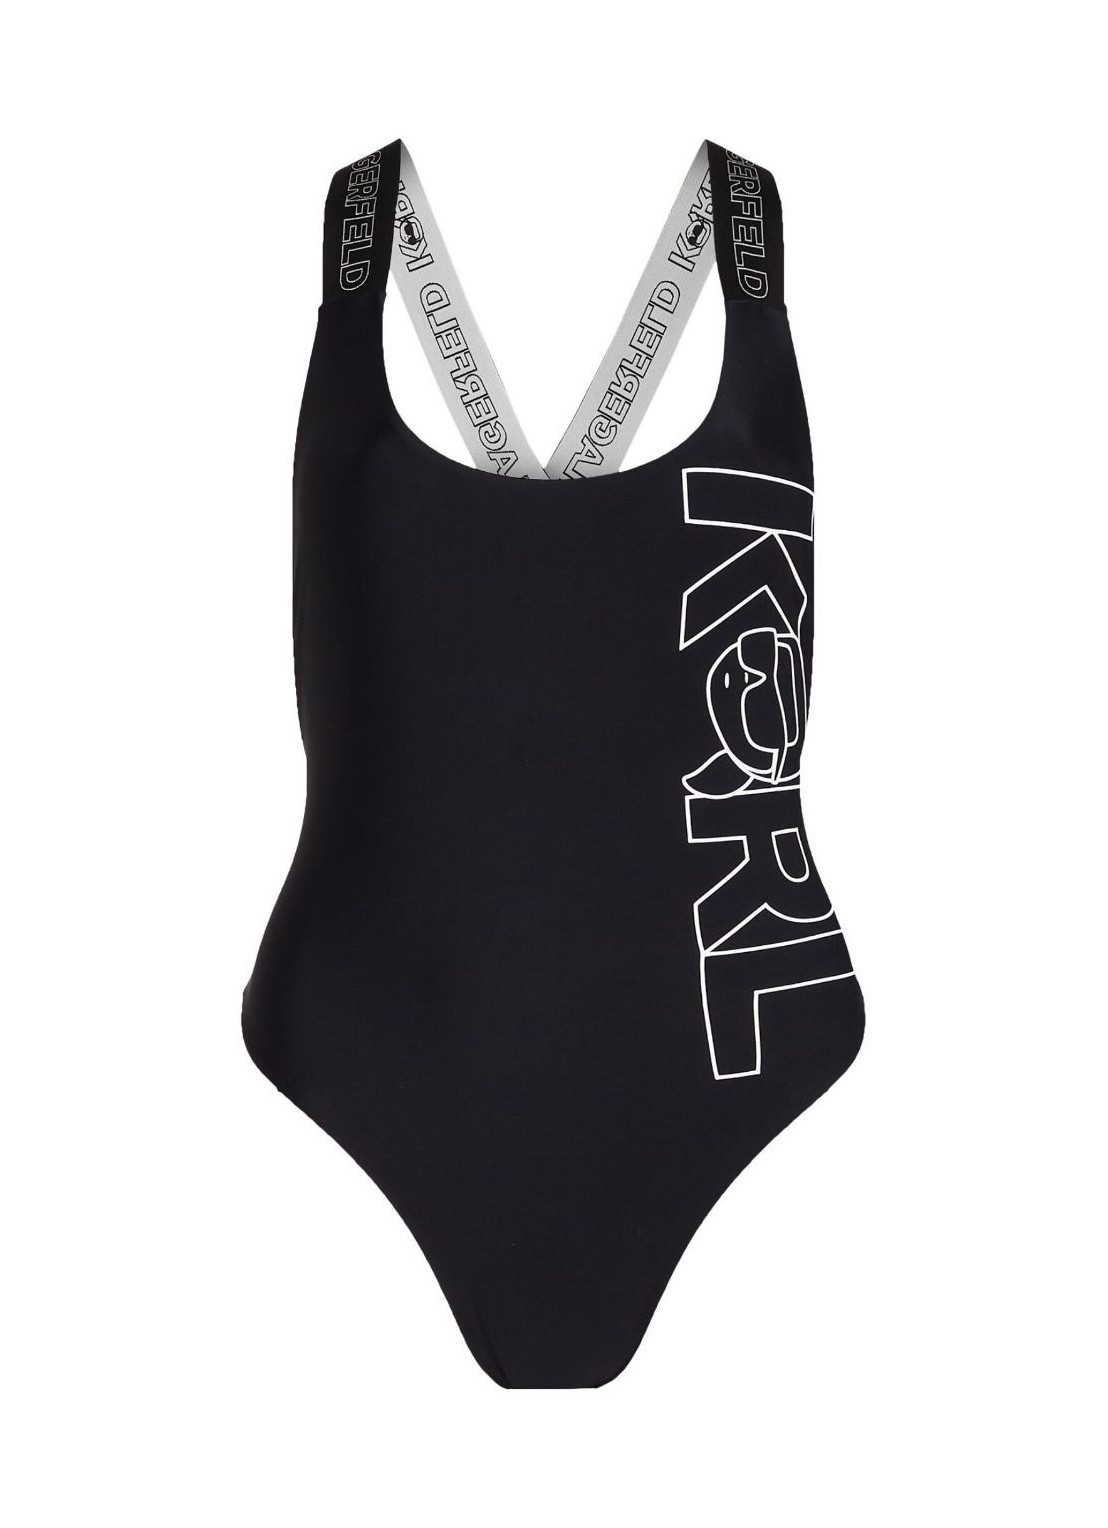 BaNador karl lagerfeld swimsuit woman ikonik 2.0 swimsuit w/ elastic 235w2228 999 talla S
 